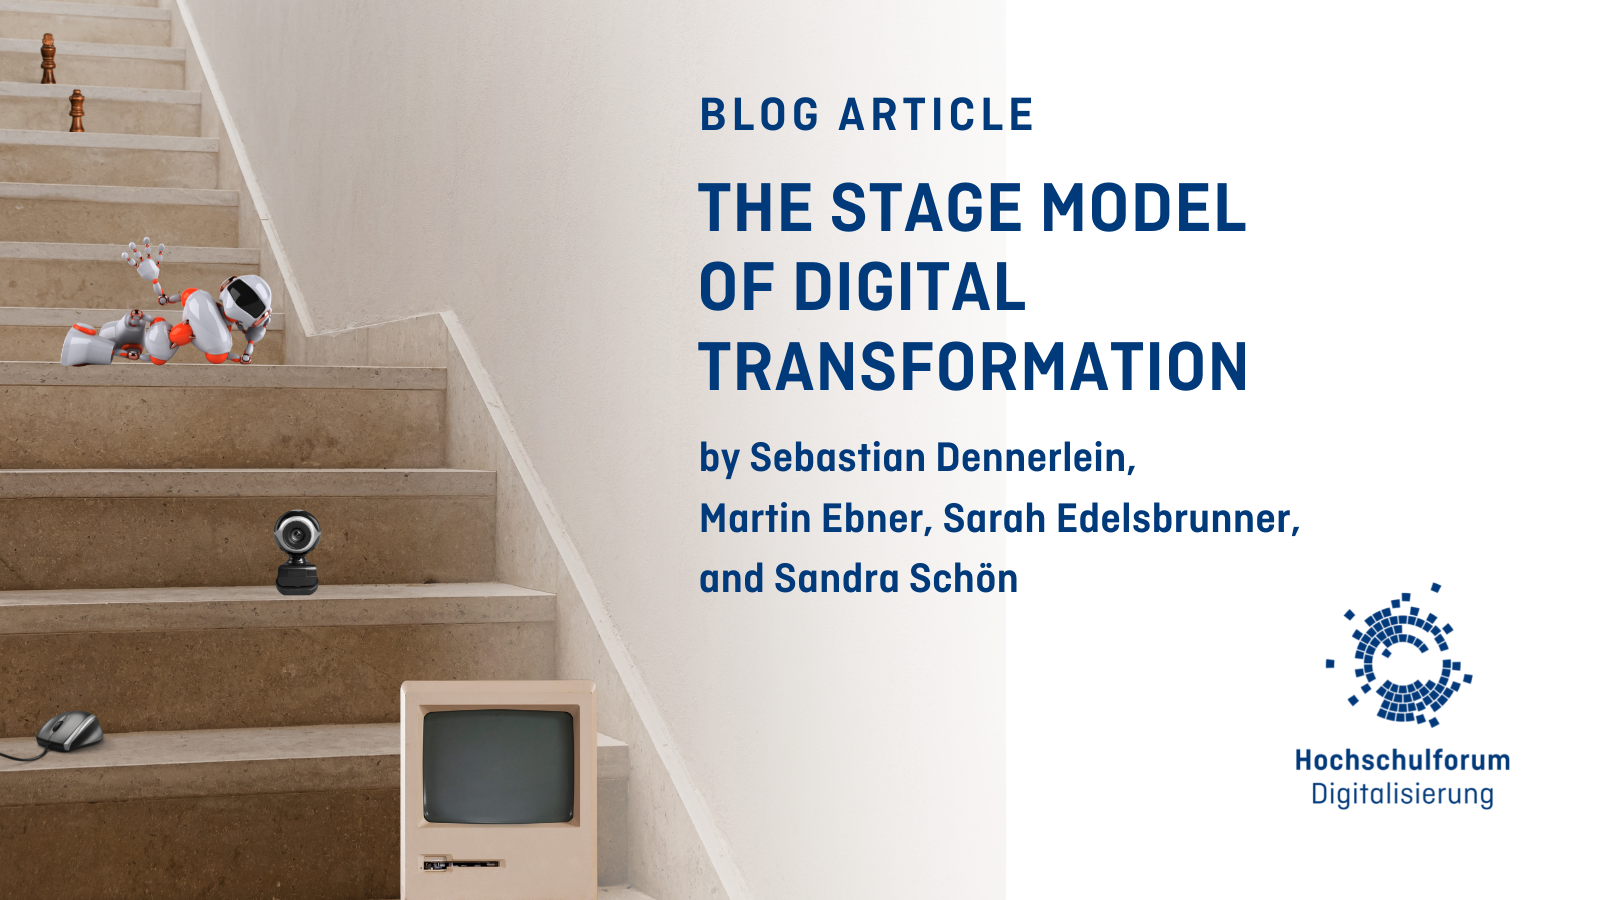 Cover image for article: THE STAGE MODEL OF DIGITAL TRANSFORMATION. Guest article by Sebastian Dennerlein, Martin Ebner, Sarah Edelsbrunner and Sandra Schön. Logo: Hochschulforum Digitalisierung.